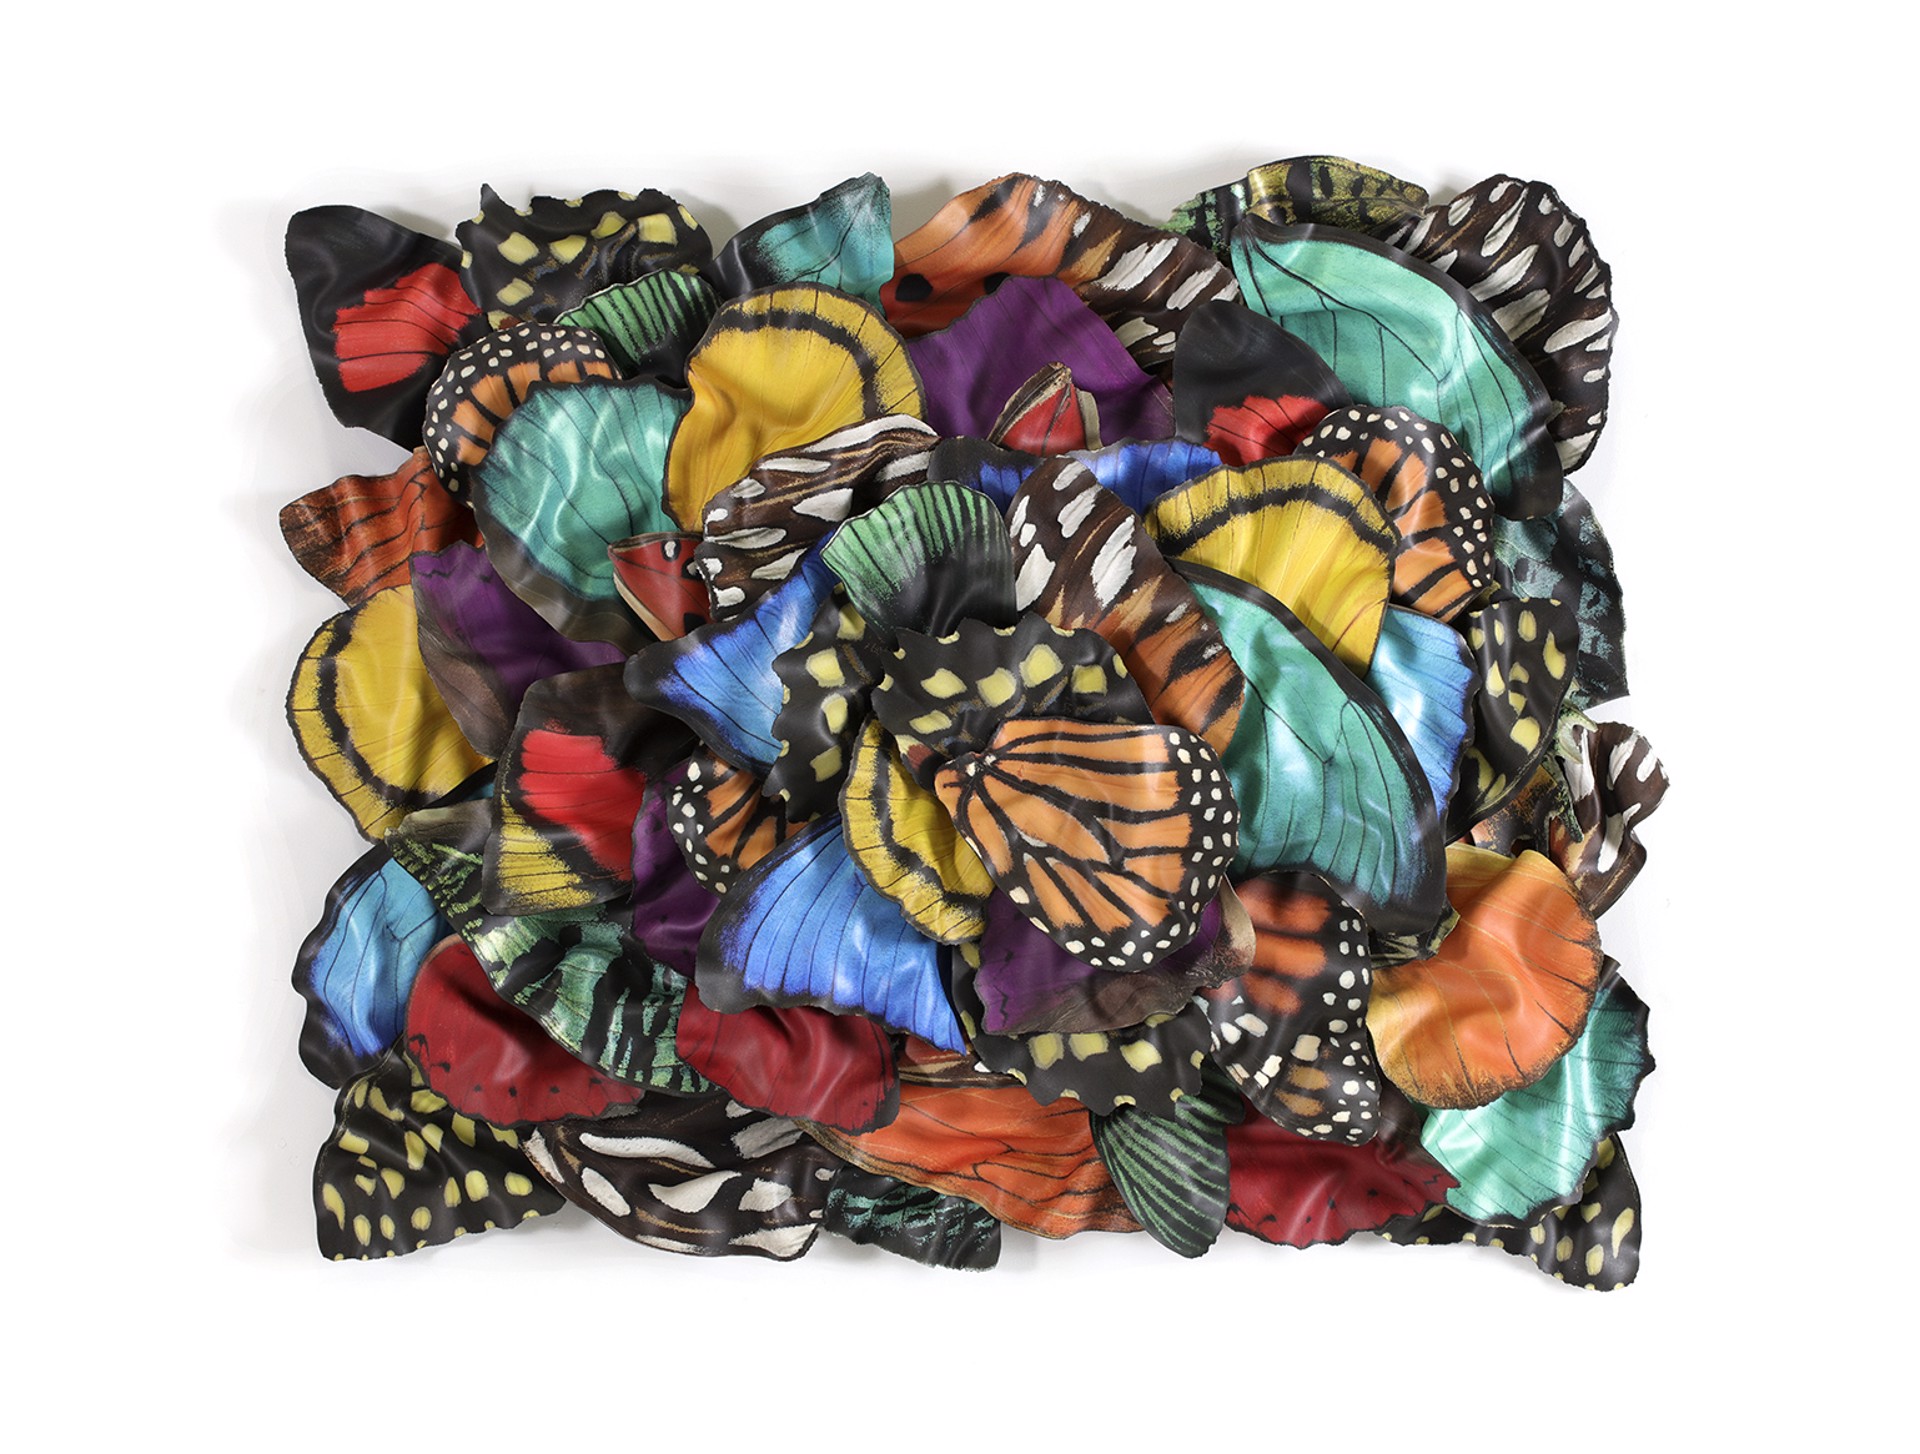 Arranged Butterfly Wings by Paul Rousso